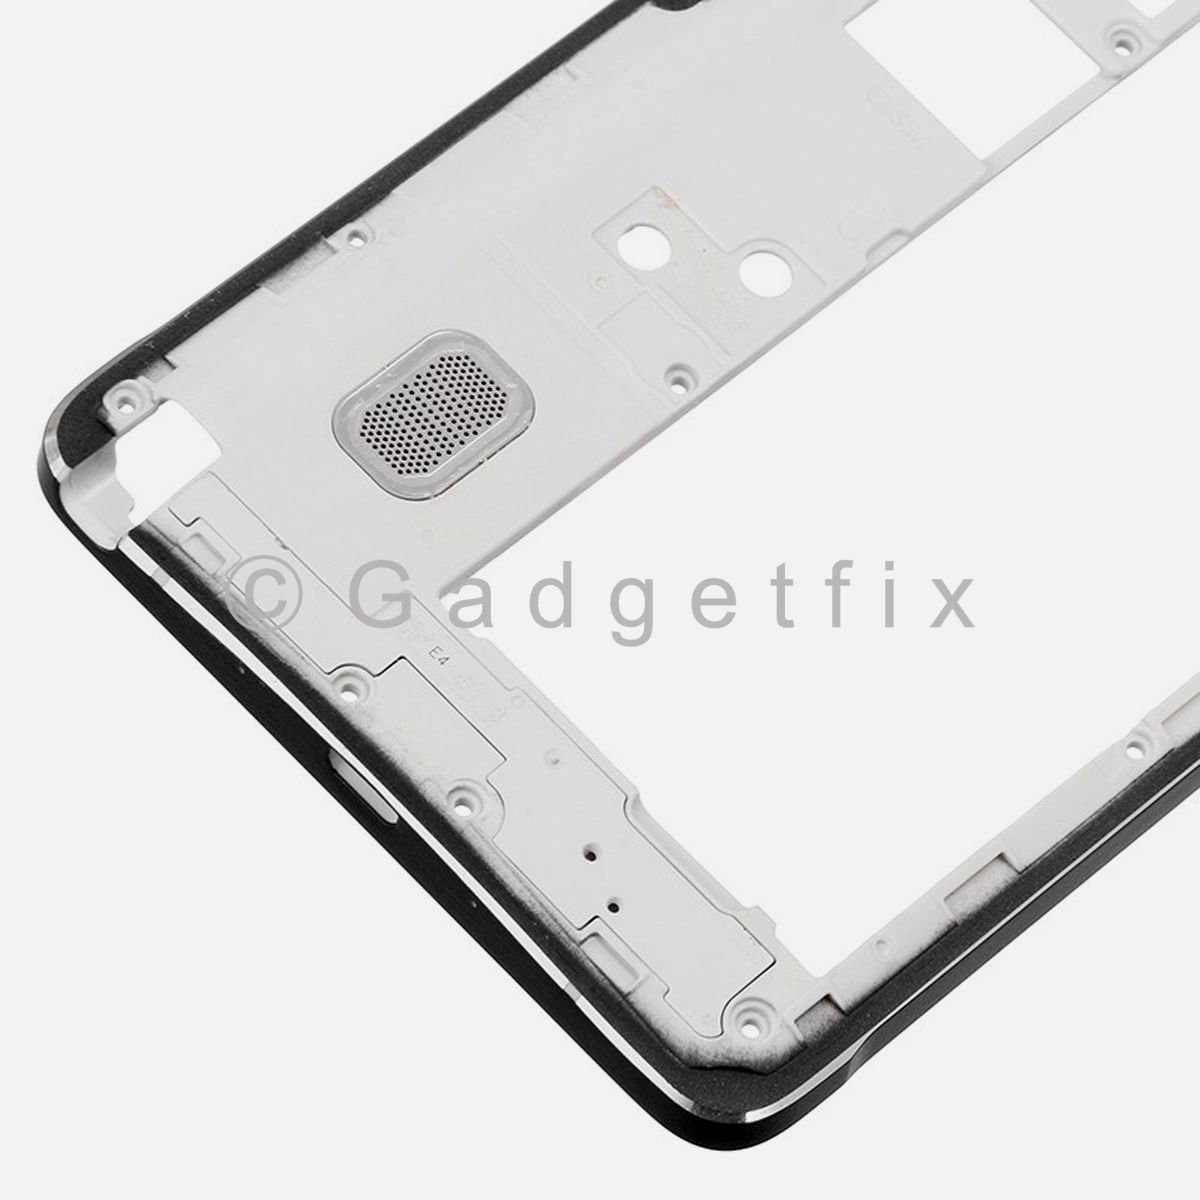 Samsung Galaxy Note 4 N910A N910T N910F Middle Frame Housing Bezel Camera Cover